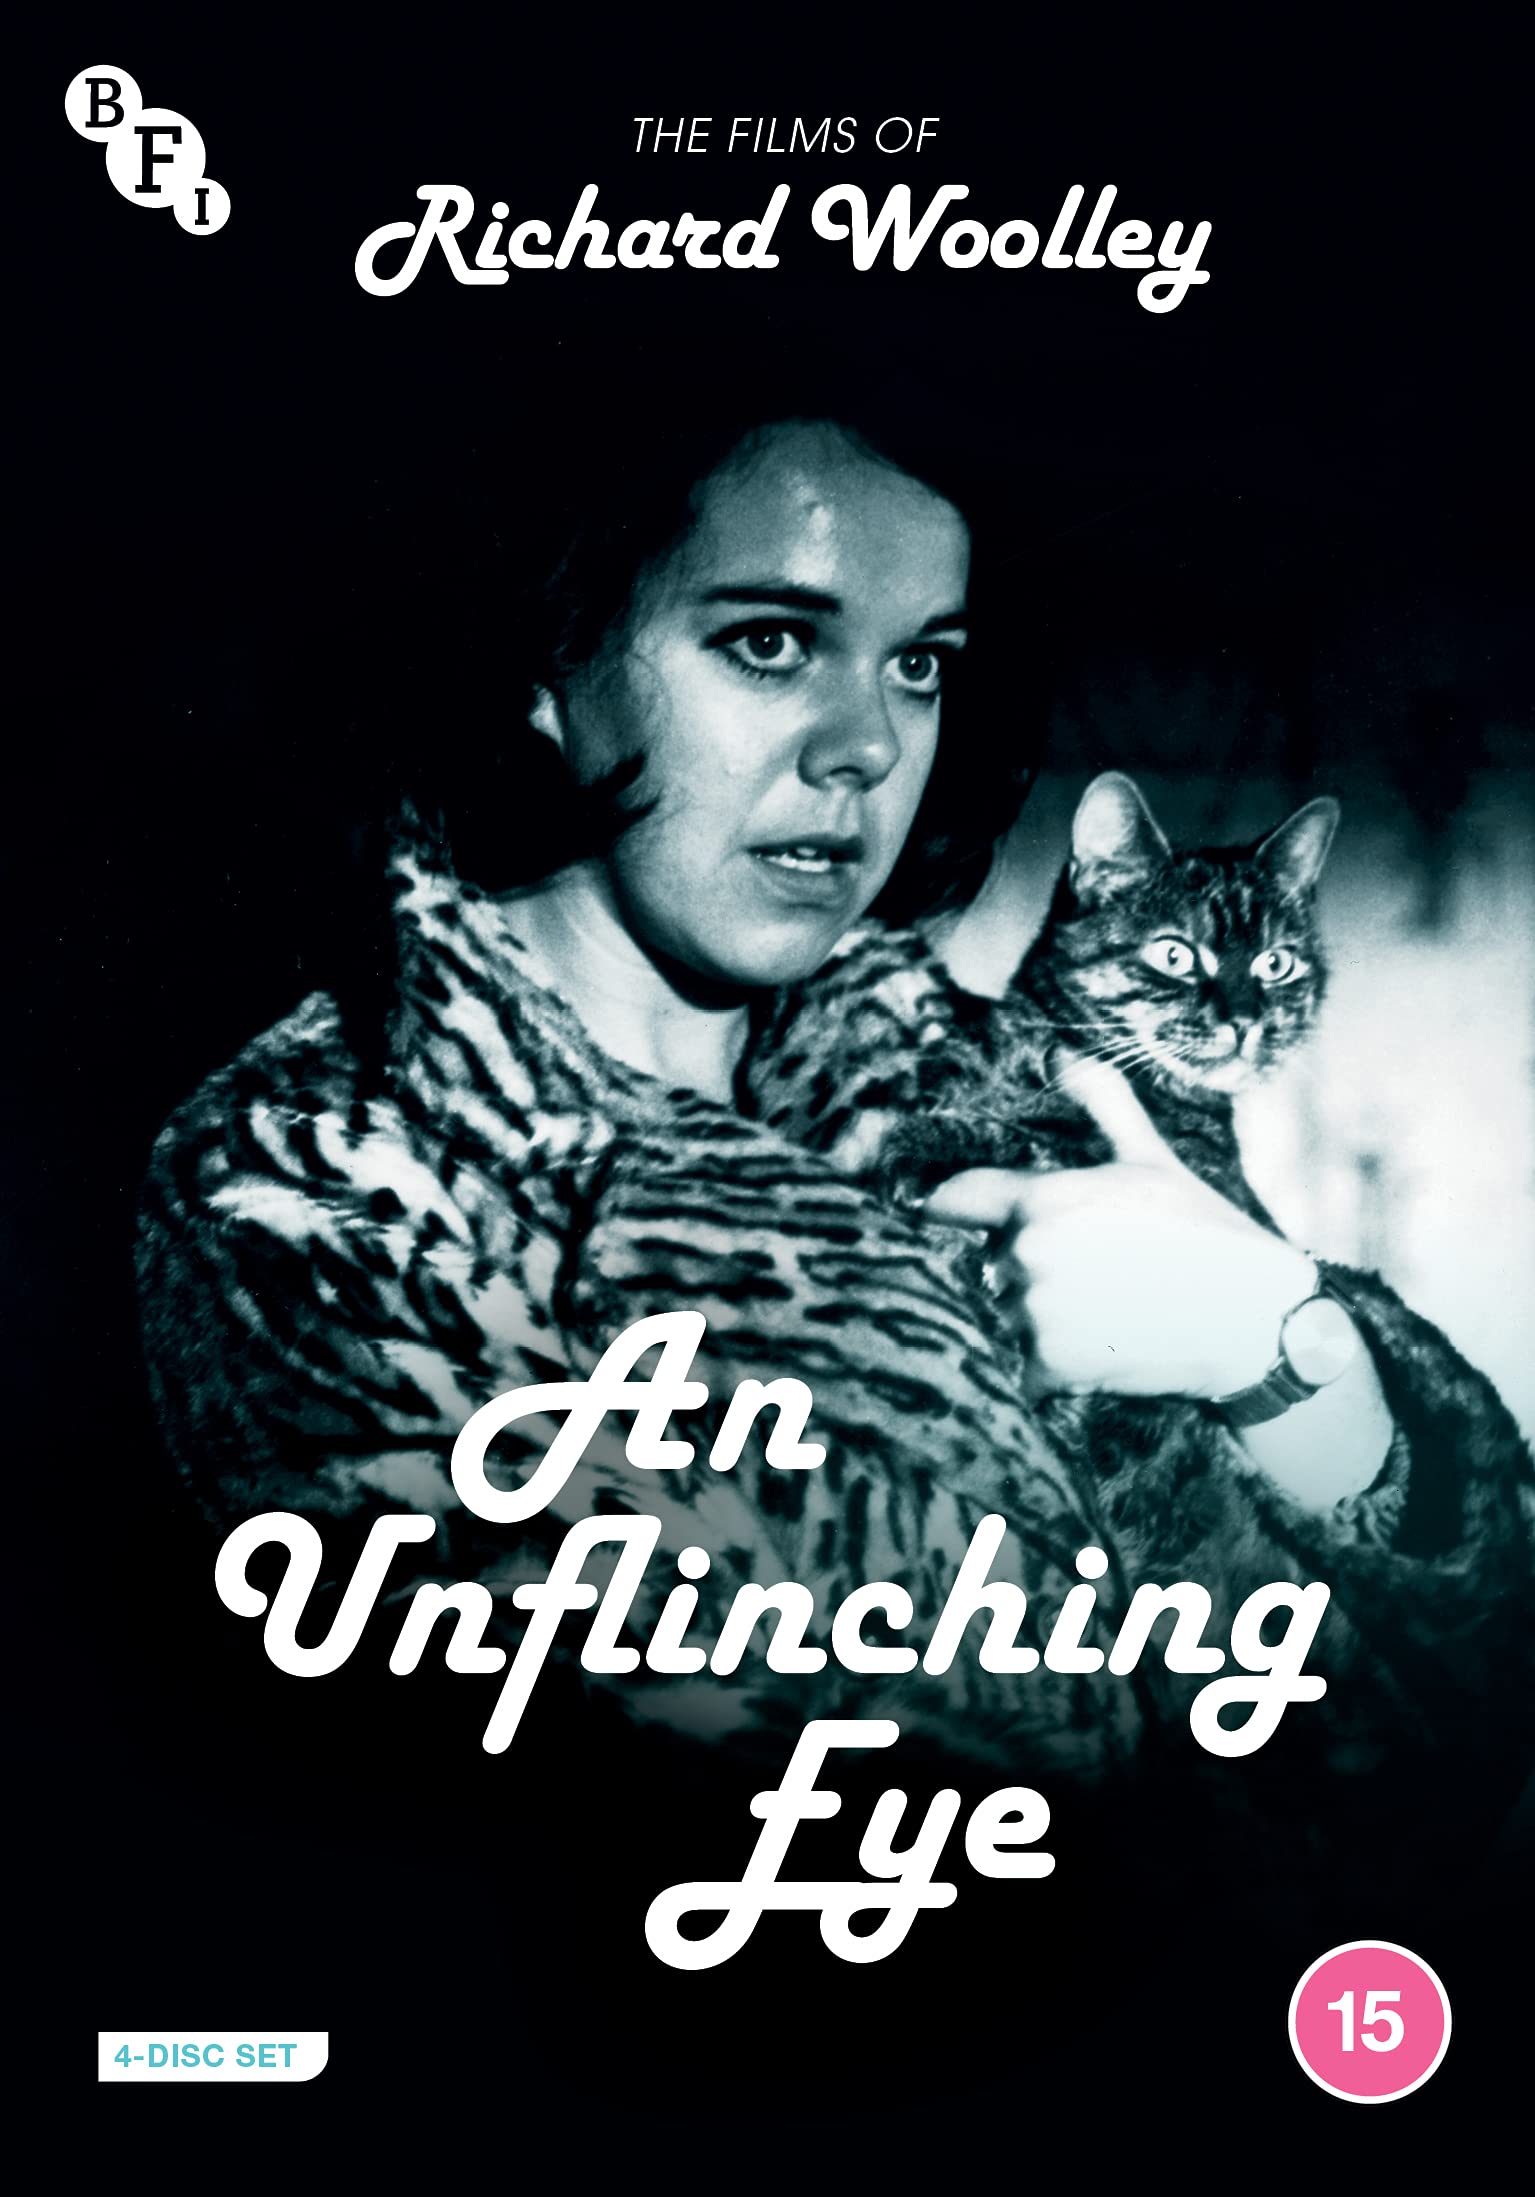 An Unflinching Eye: The Films of Richard Woolley [DVD]